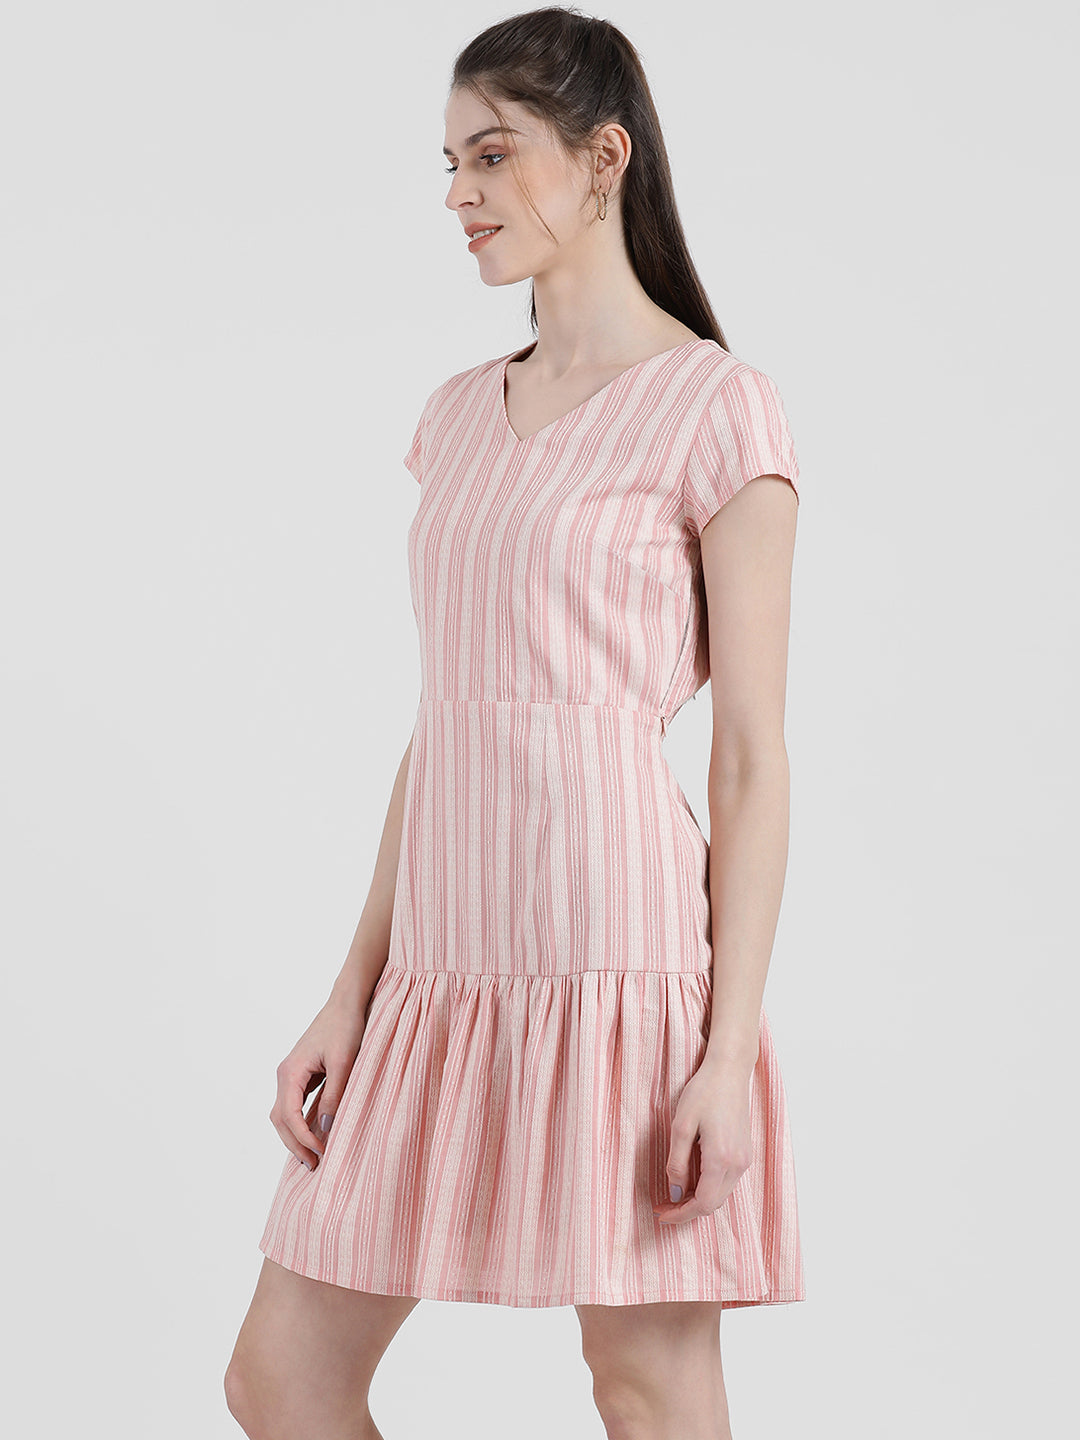 Zink London Women's Striped Peplum Dress